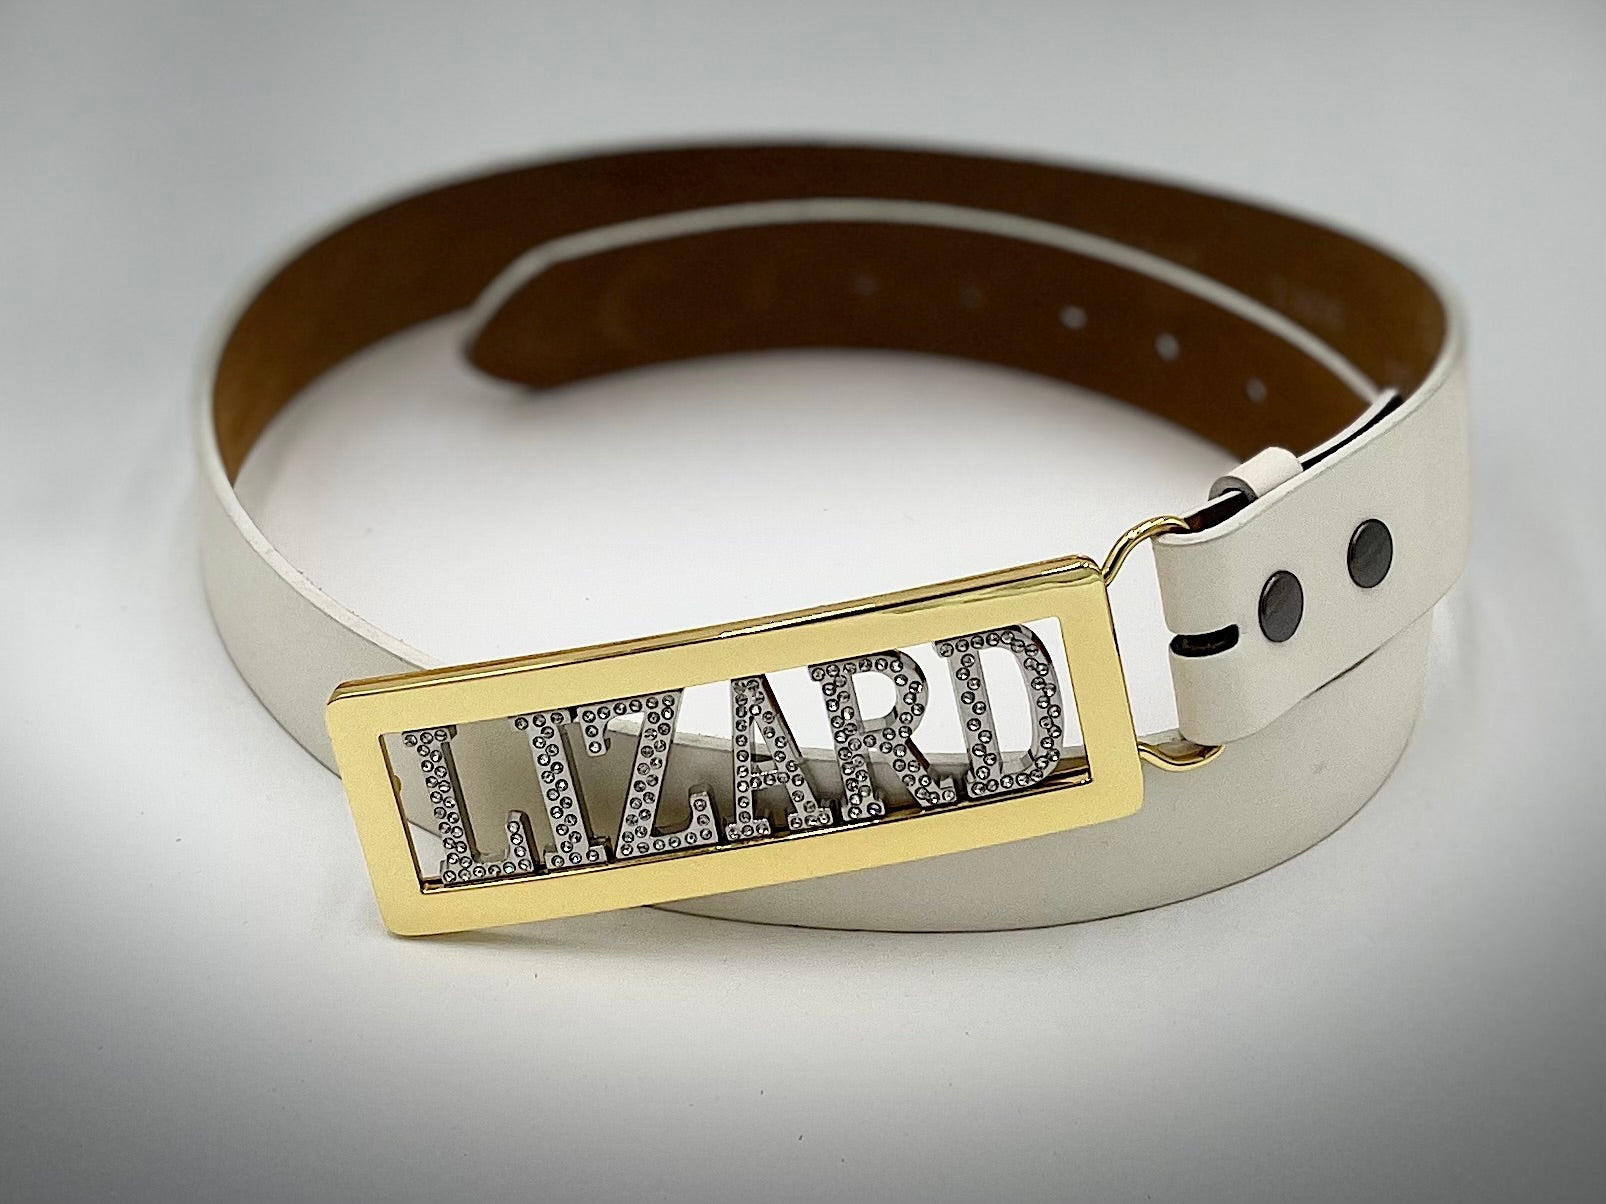 LIZARD custom belt buckle gold frame rhinestome letters with free belt